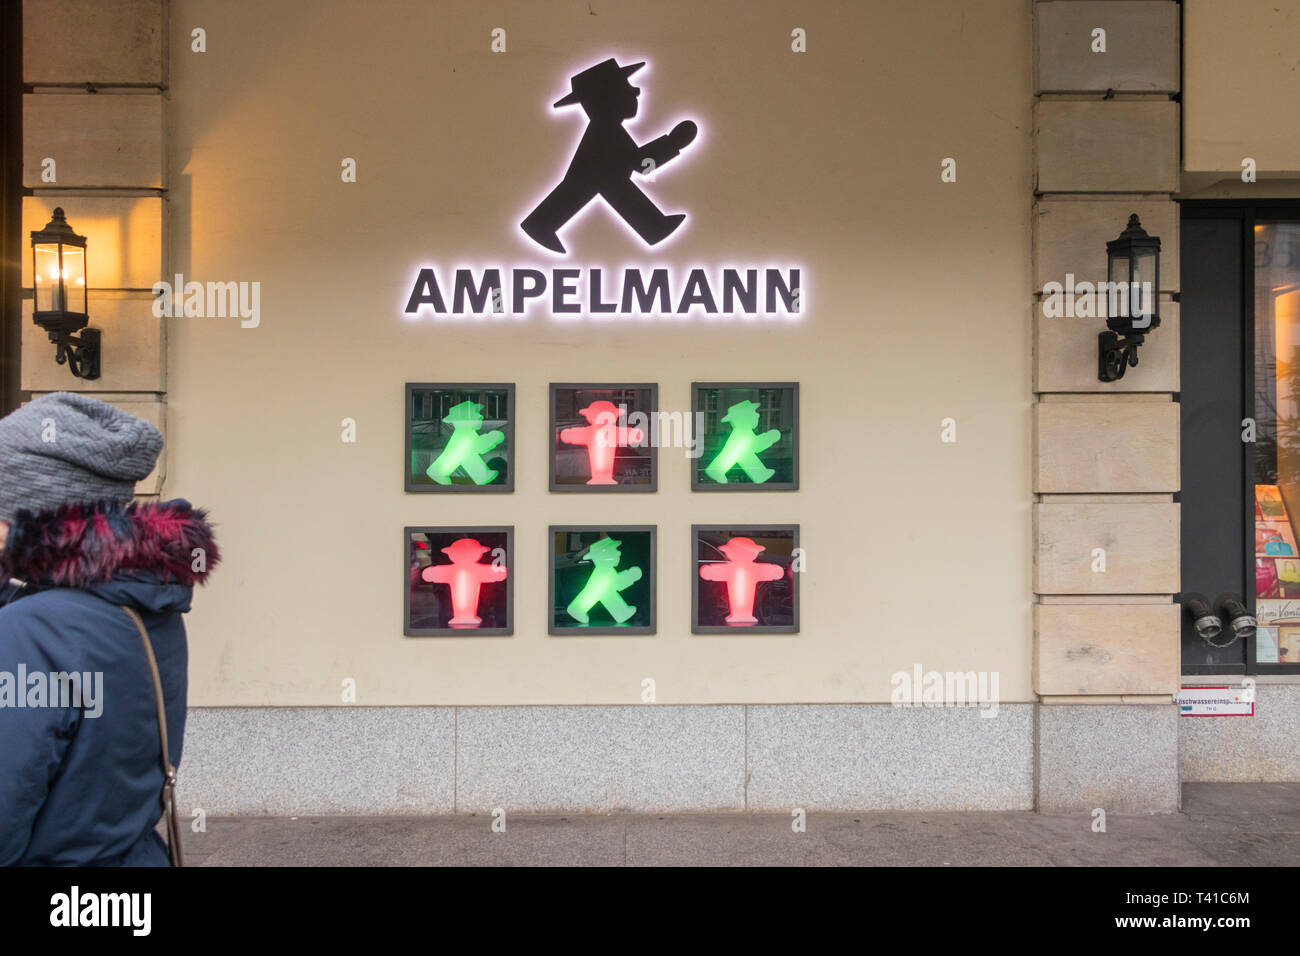 famous Ampelmännchen pedestrian crossing symbols in Berlin Germany Stock Photo